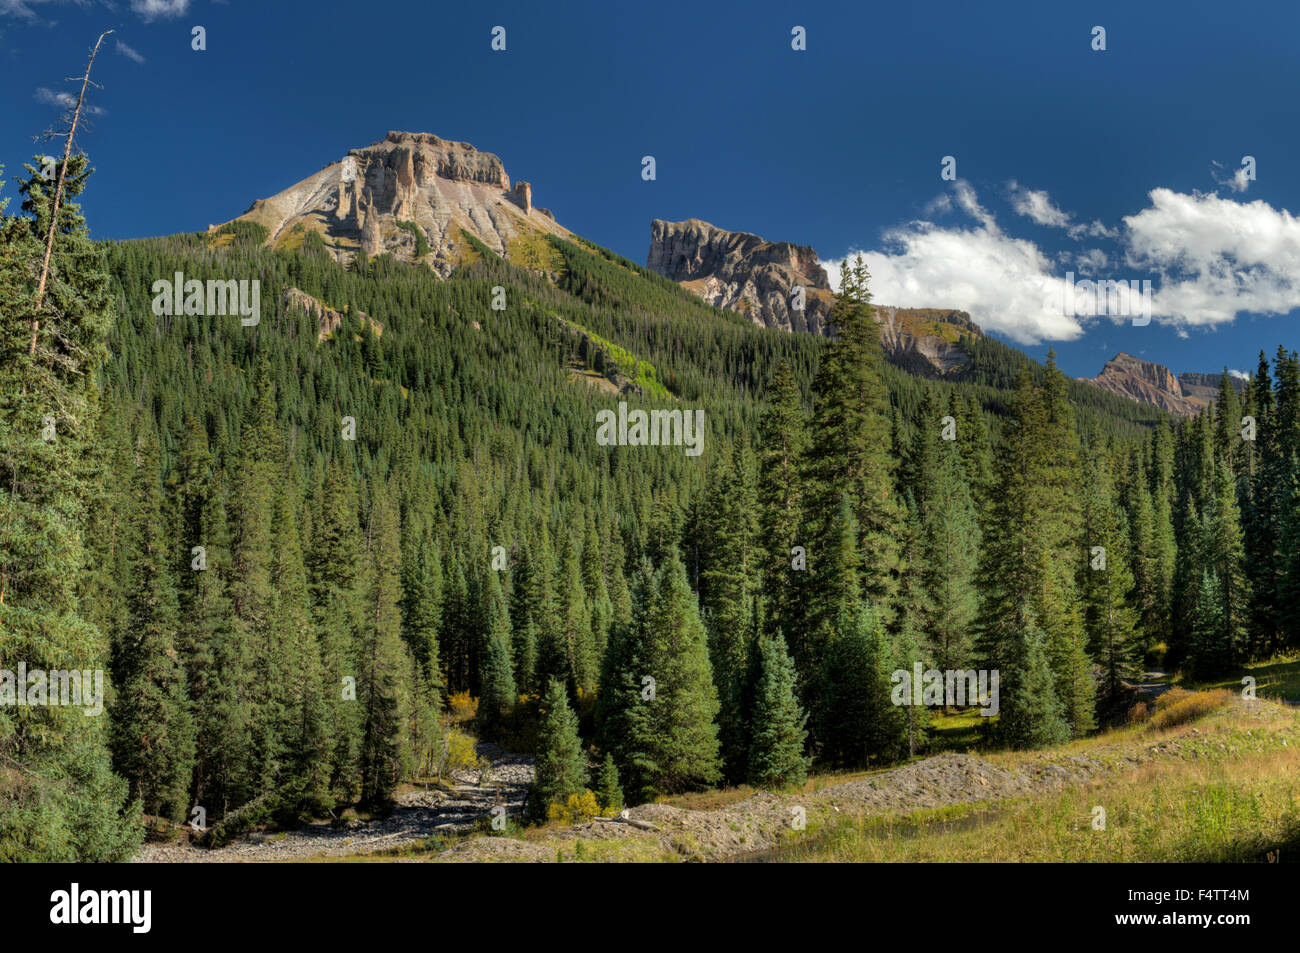 Dunsinane Mountain (L) and Precipice Peak (R) in the San Juan Mountains of Colorado. Stock Photo